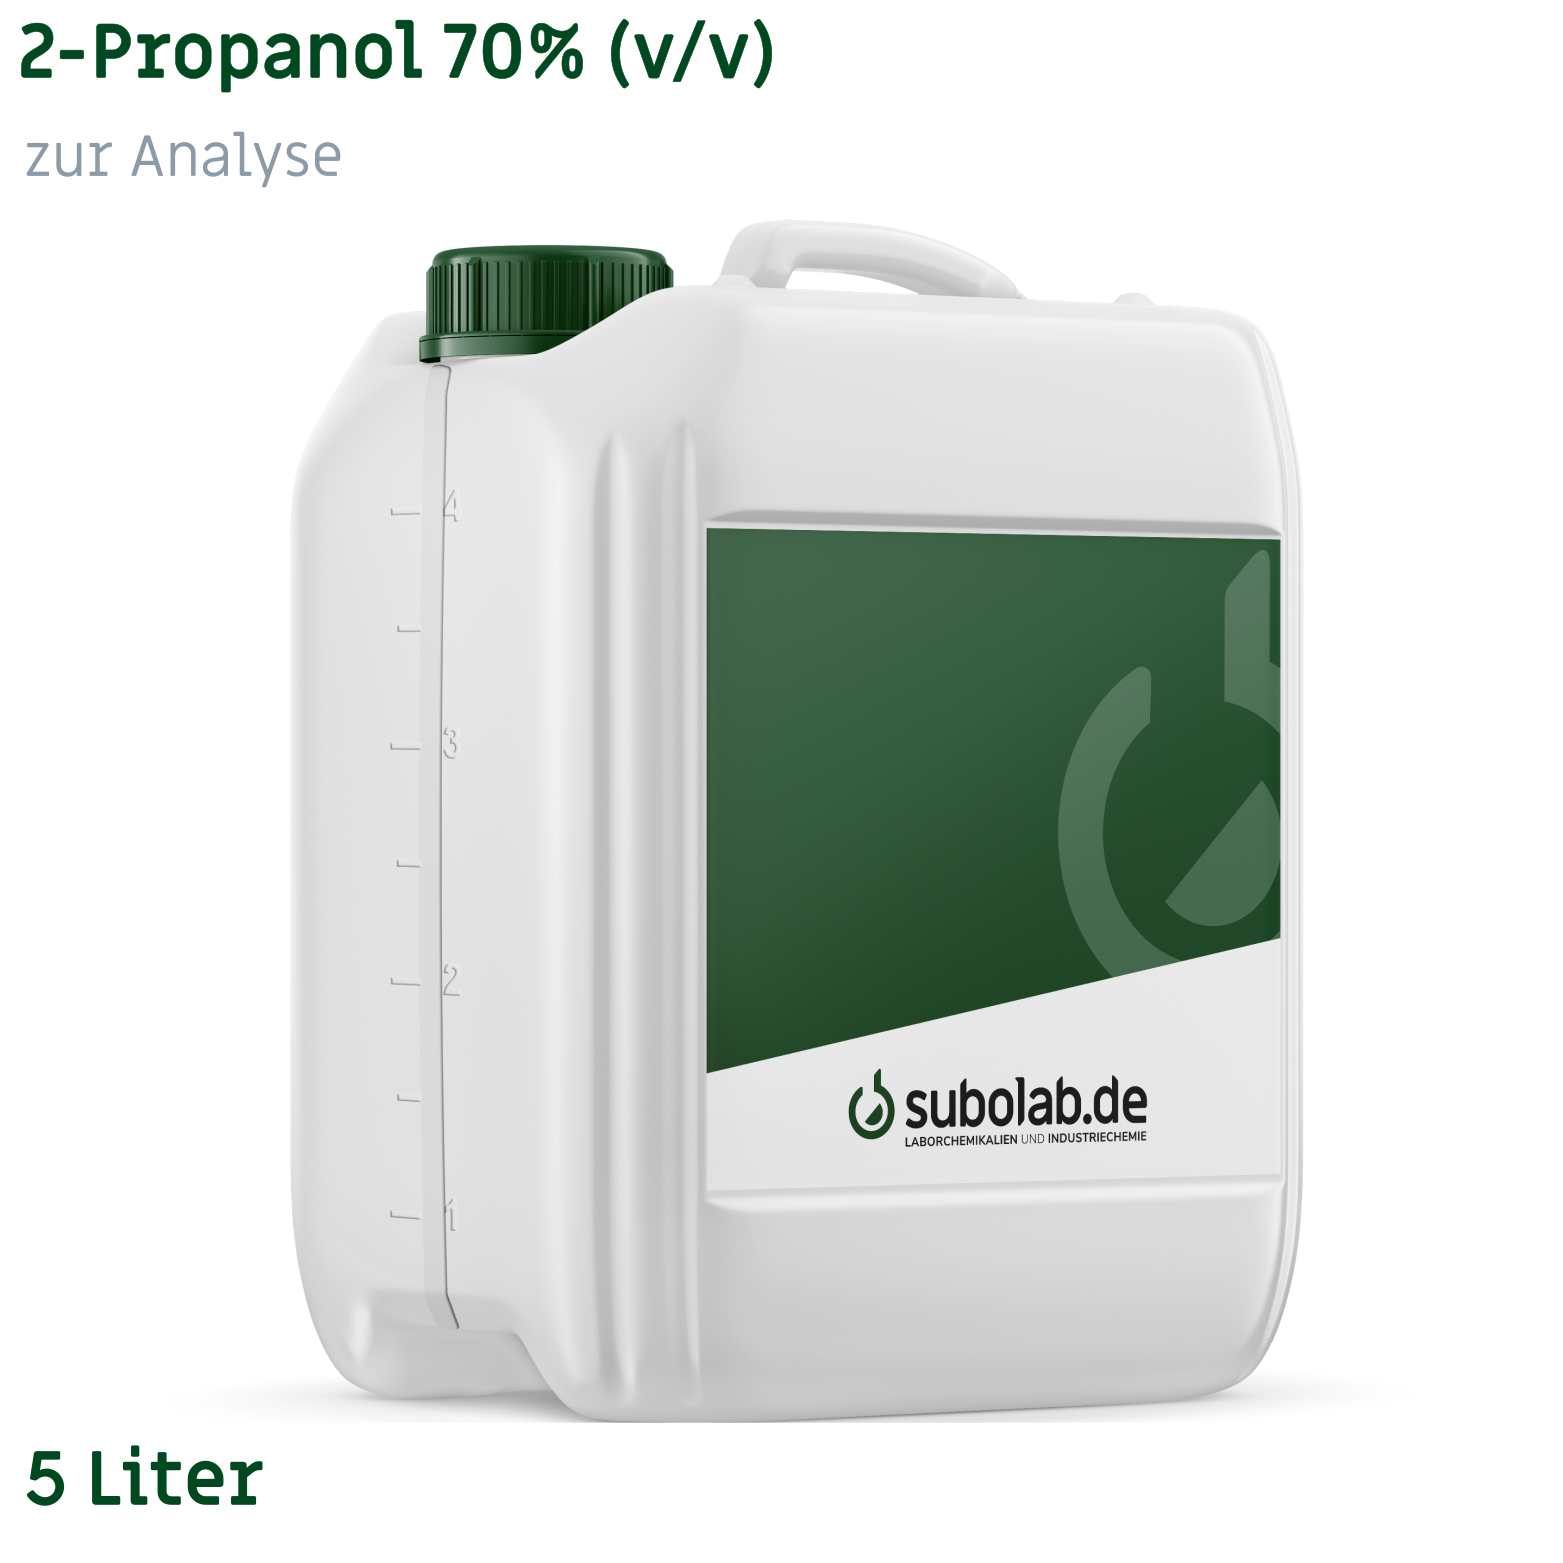 Bild von 2-Propanol 70% (v/v) zur Analyse (5 Liter)